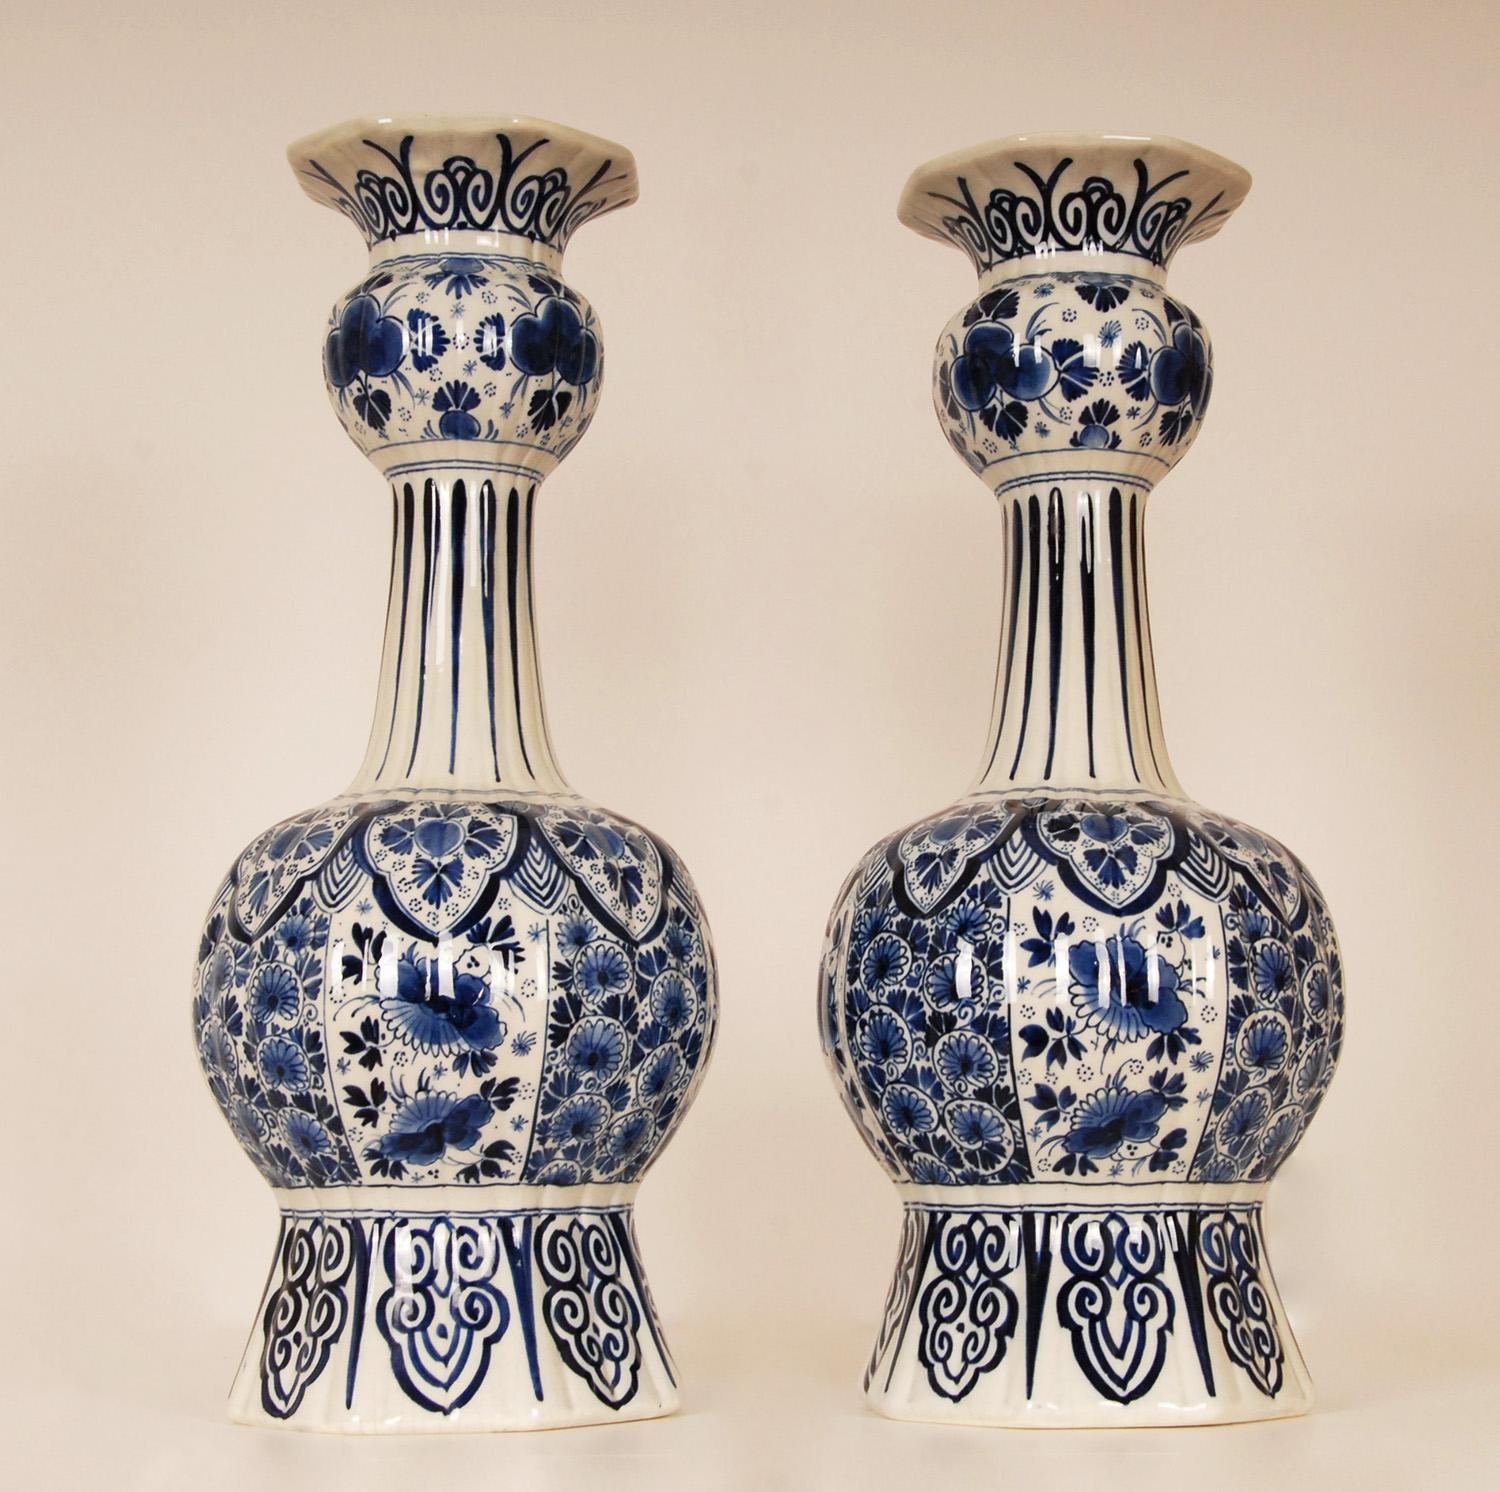 Baroque Revival Antique Royal Delft Vases Chinoiserie Blue White Knobble Vases Earthenware pair For Sale